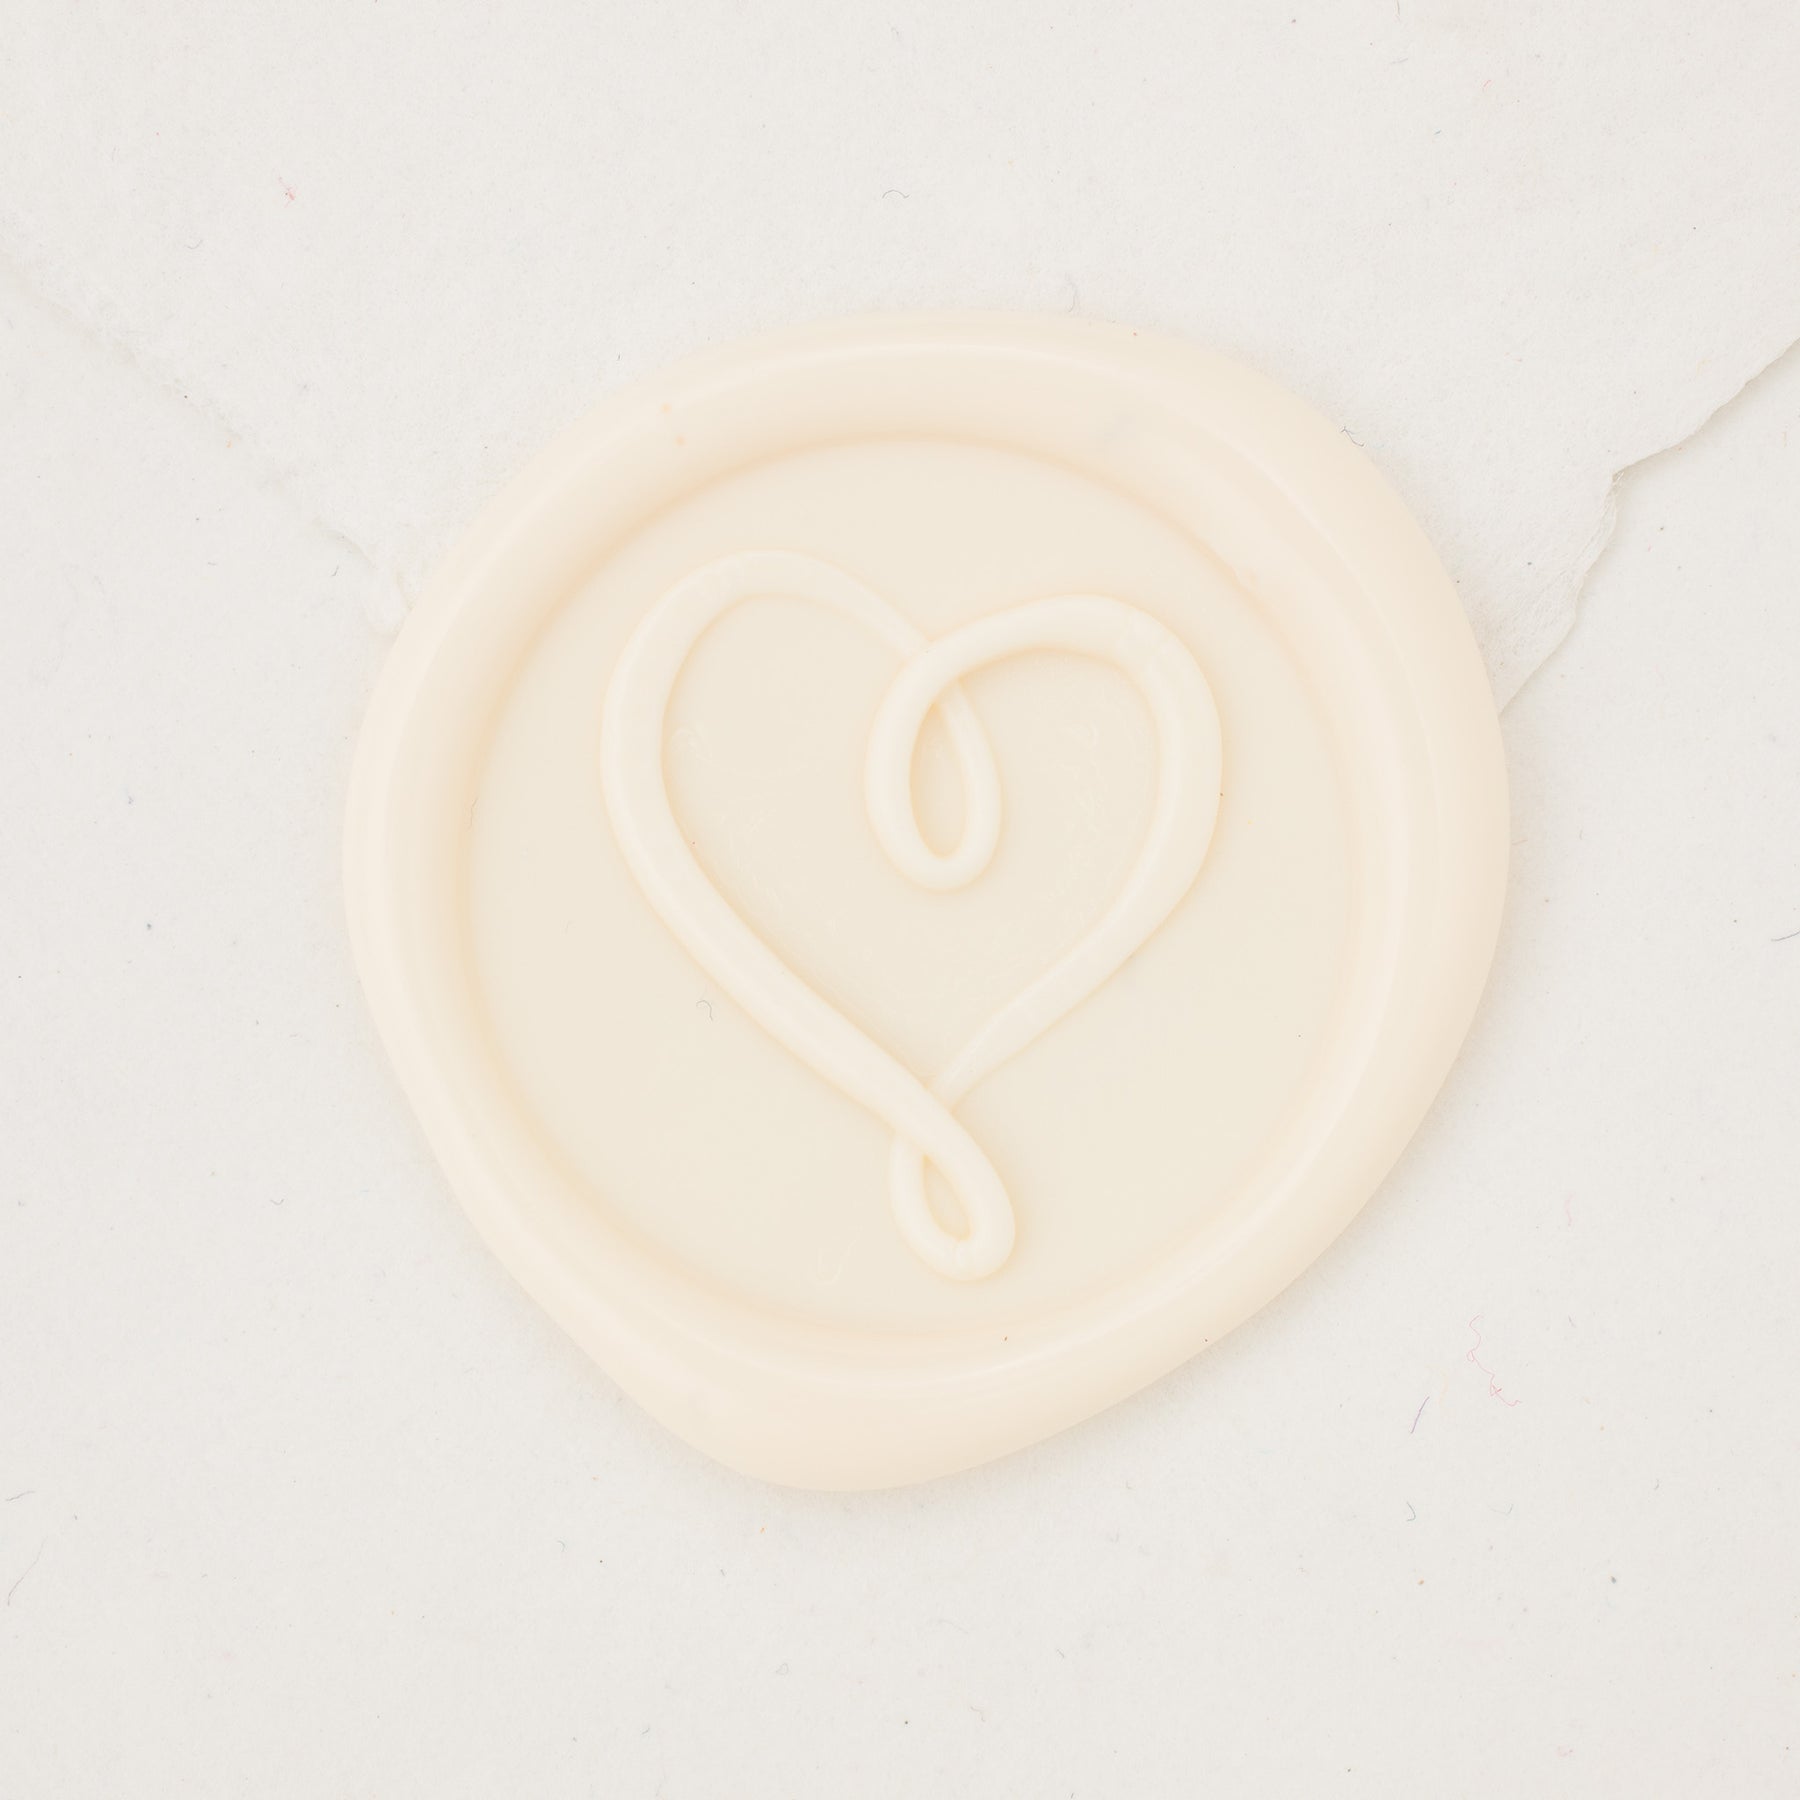 3D Simple Heart Wax Seal Stamp head, just under 7/8 diameter